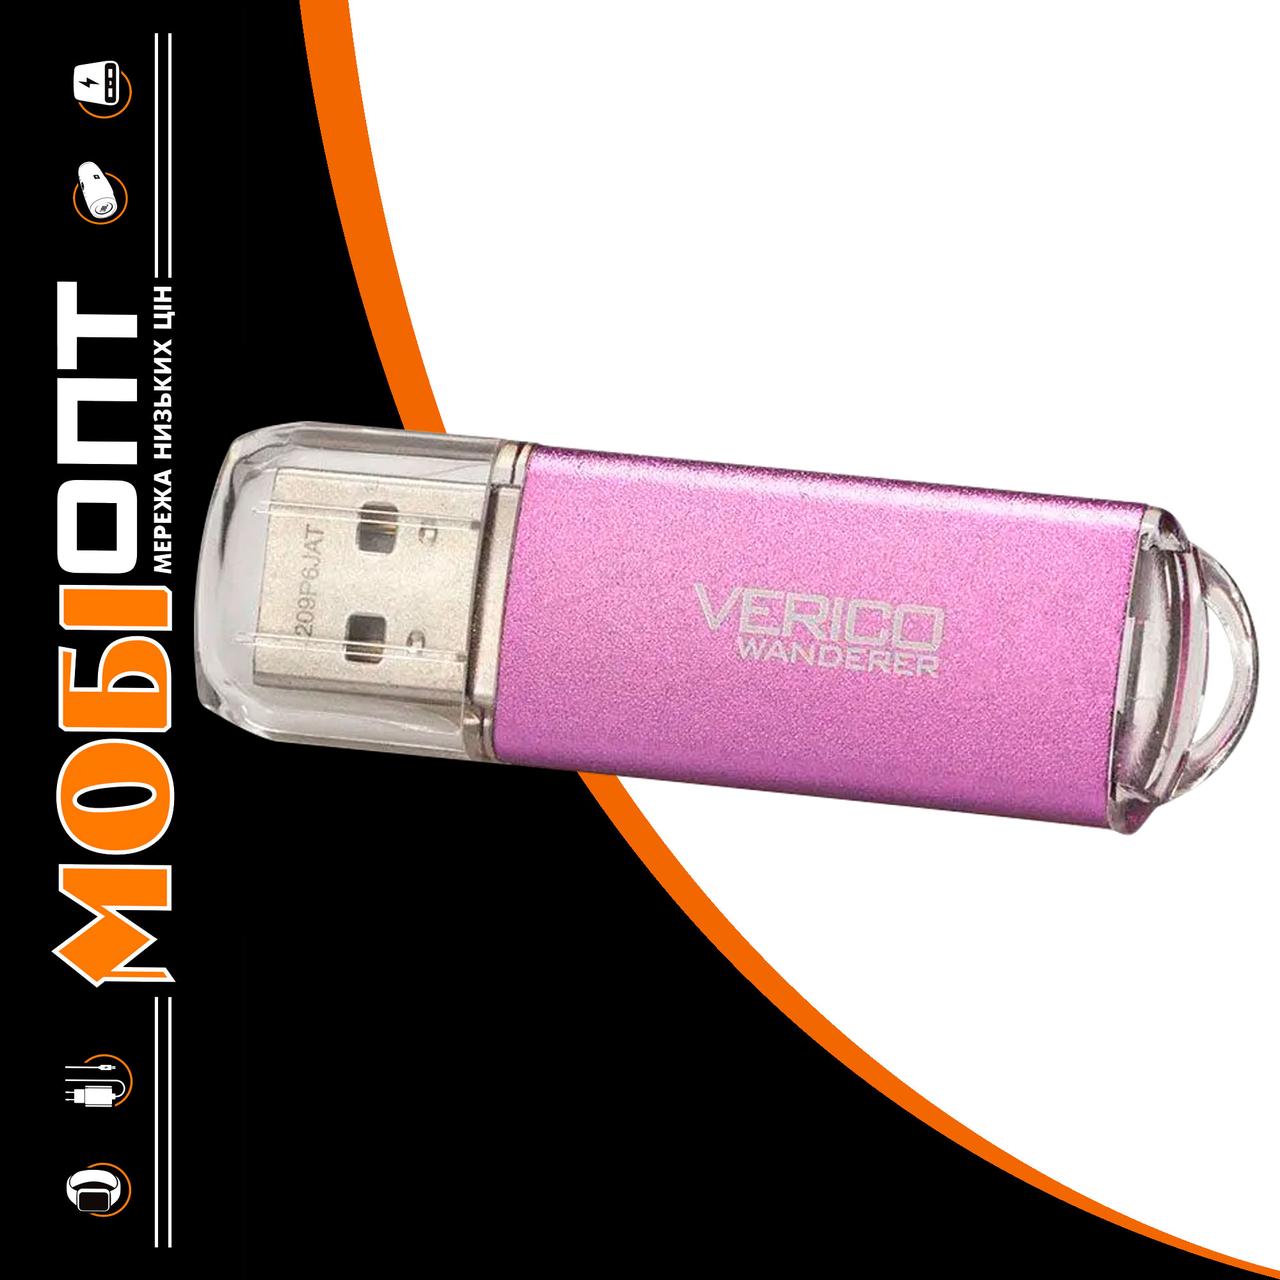 USB Flash 32GB Verico Wanderer